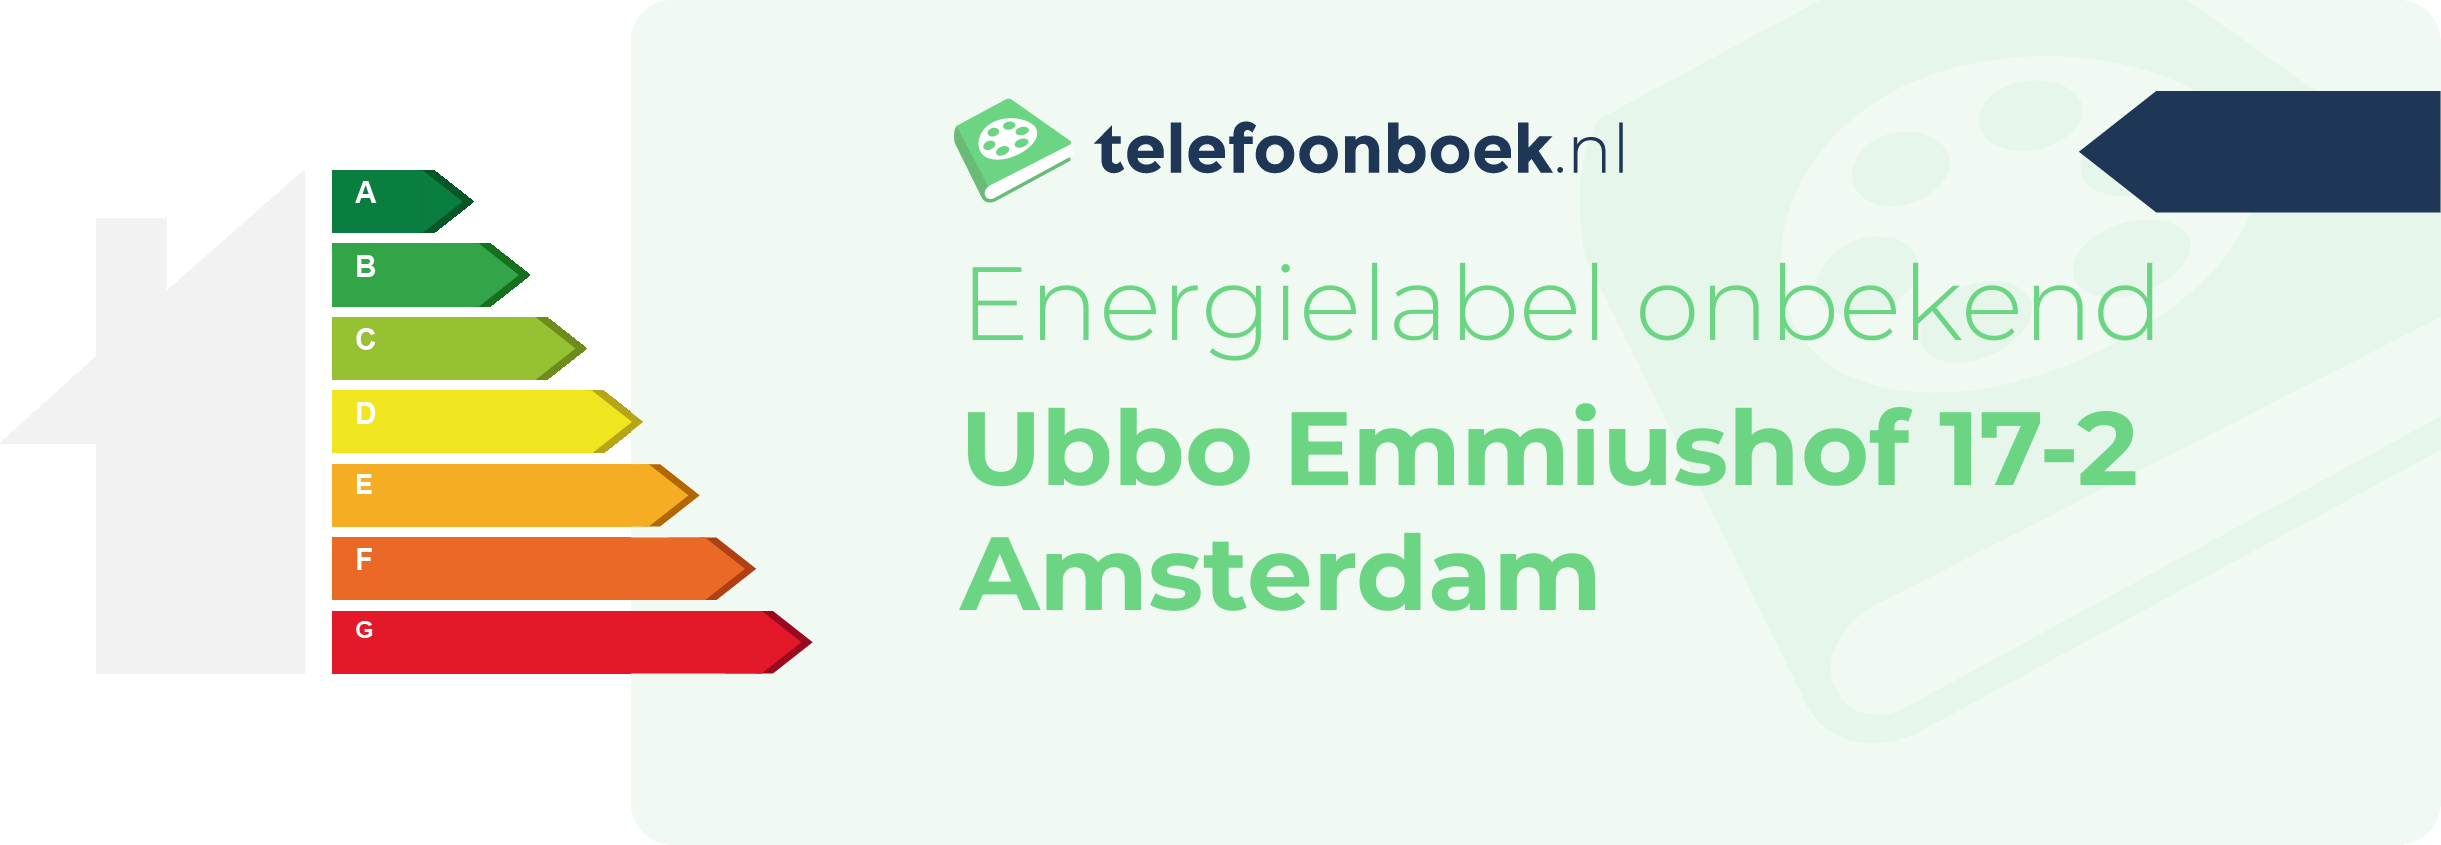 Energielabel Ubbo Emmiushof 17-2 Amsterdam